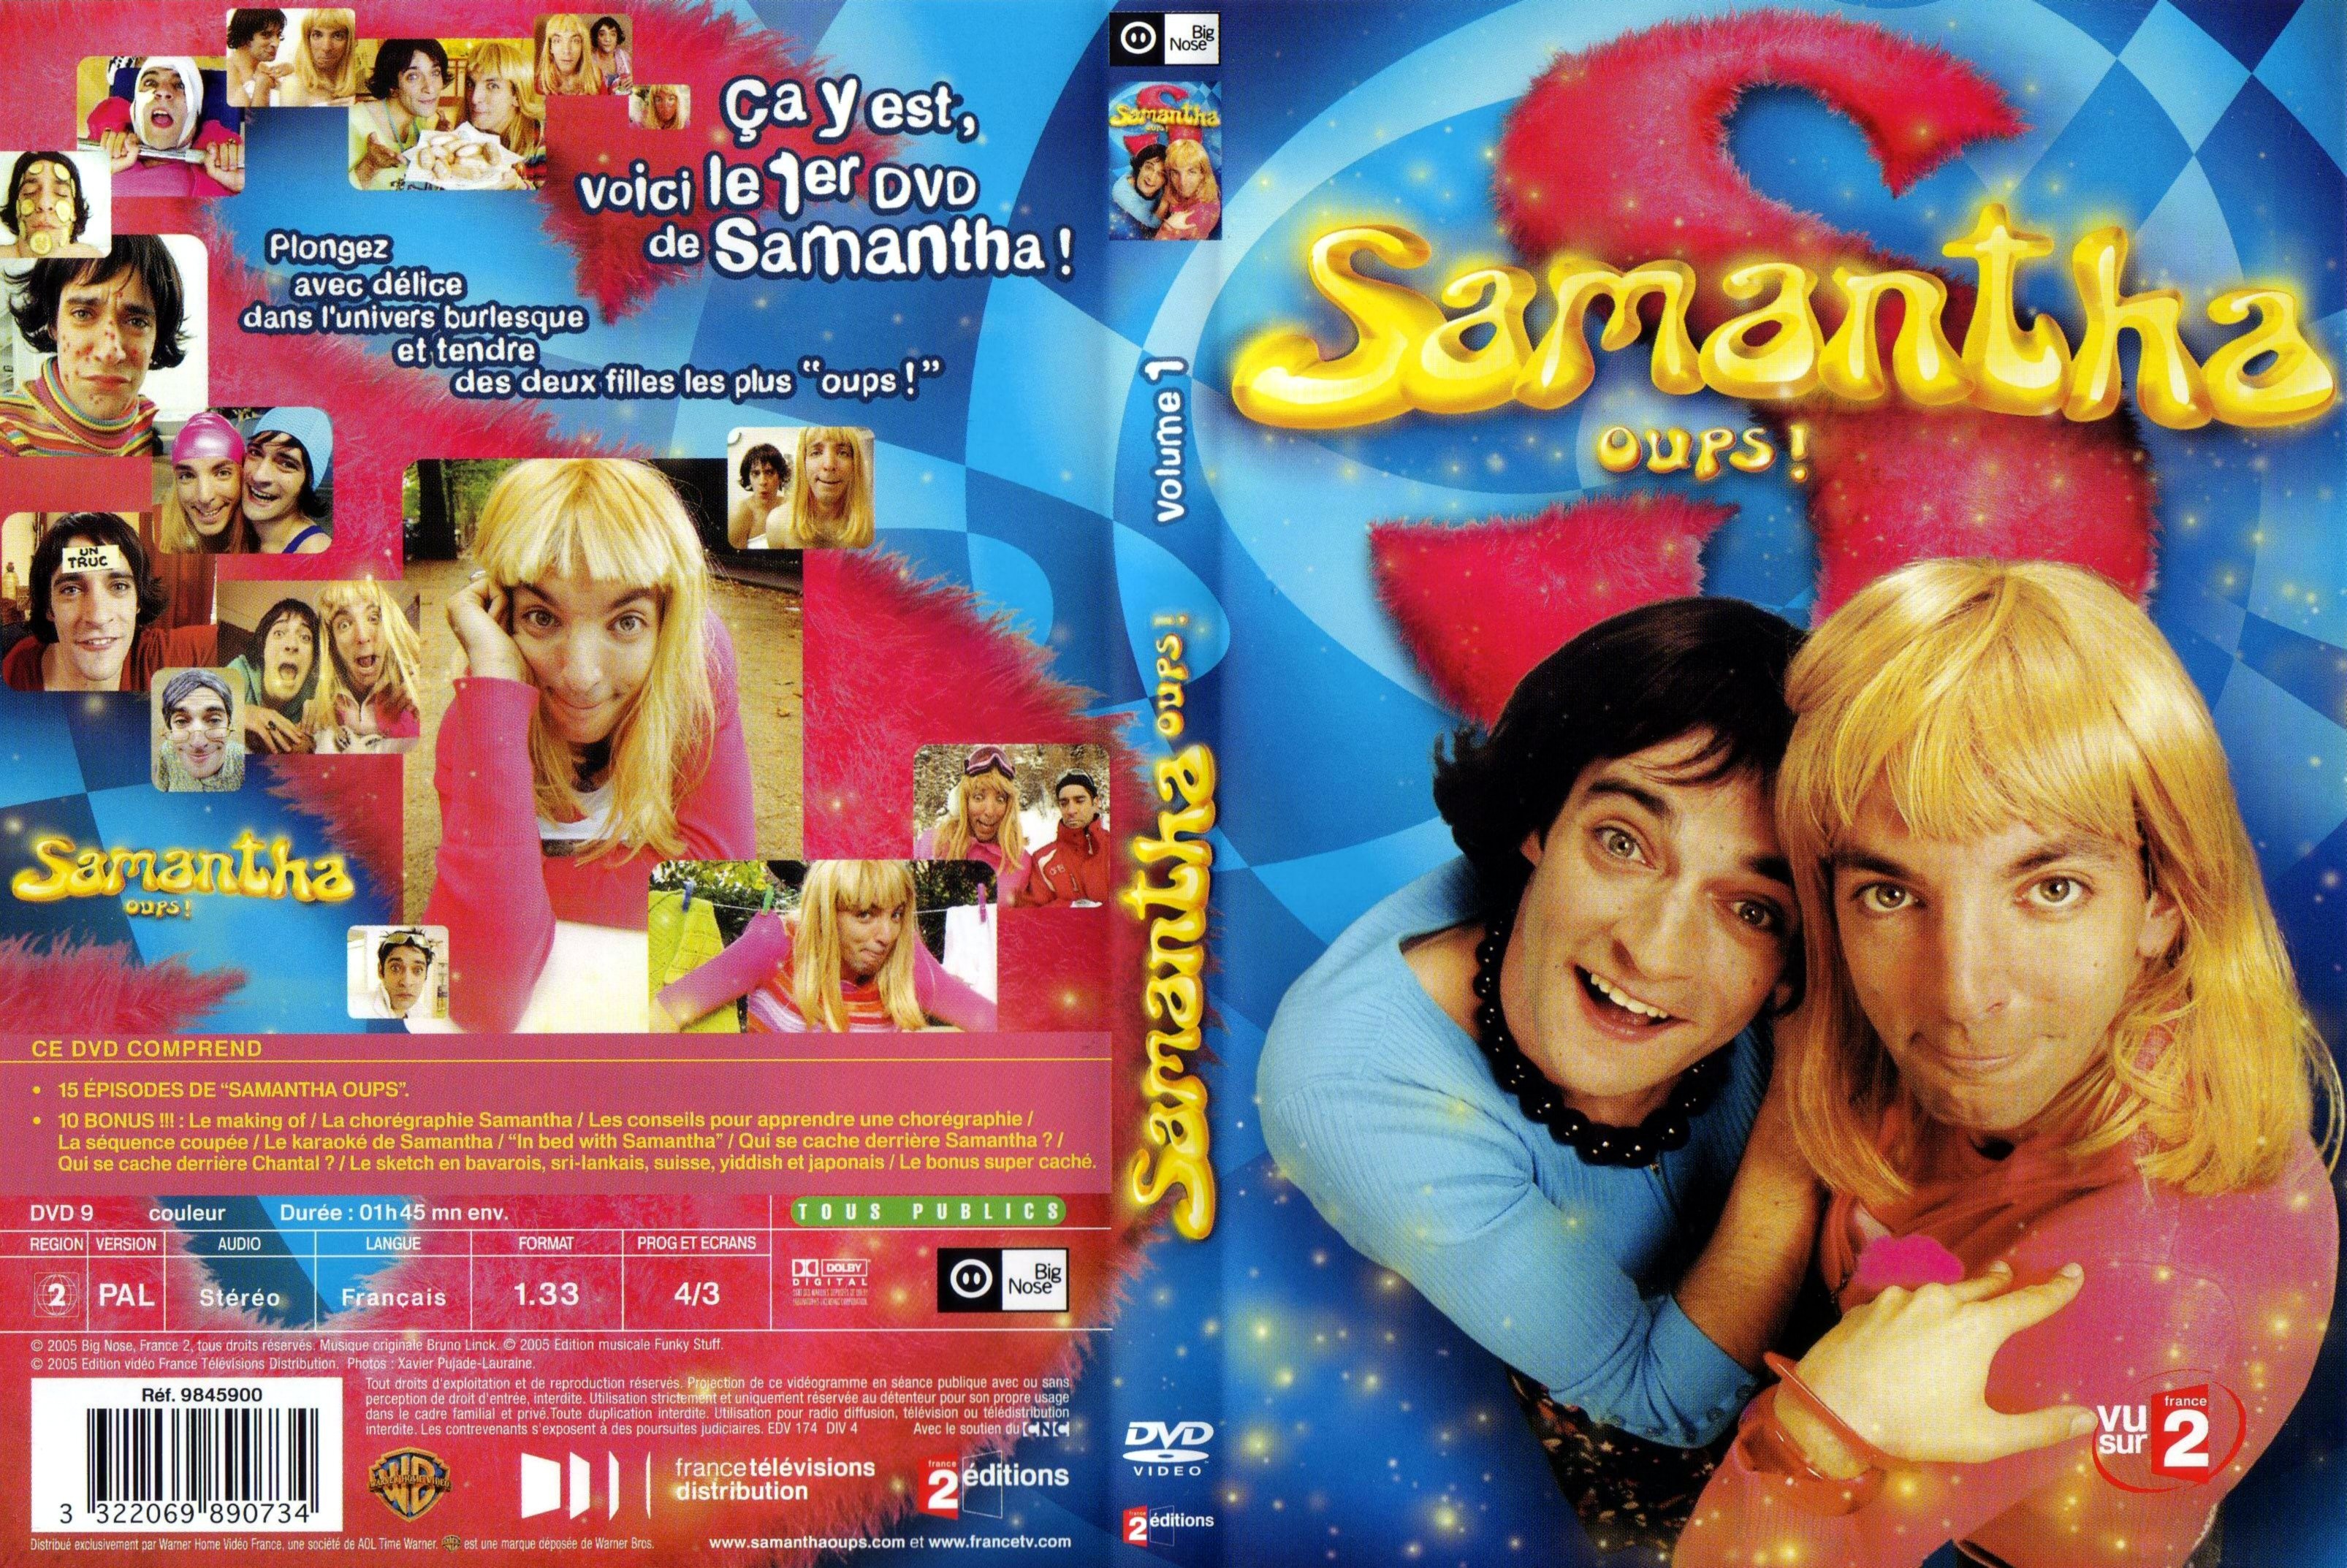 Jaquette DVD Samantha oups vol 1